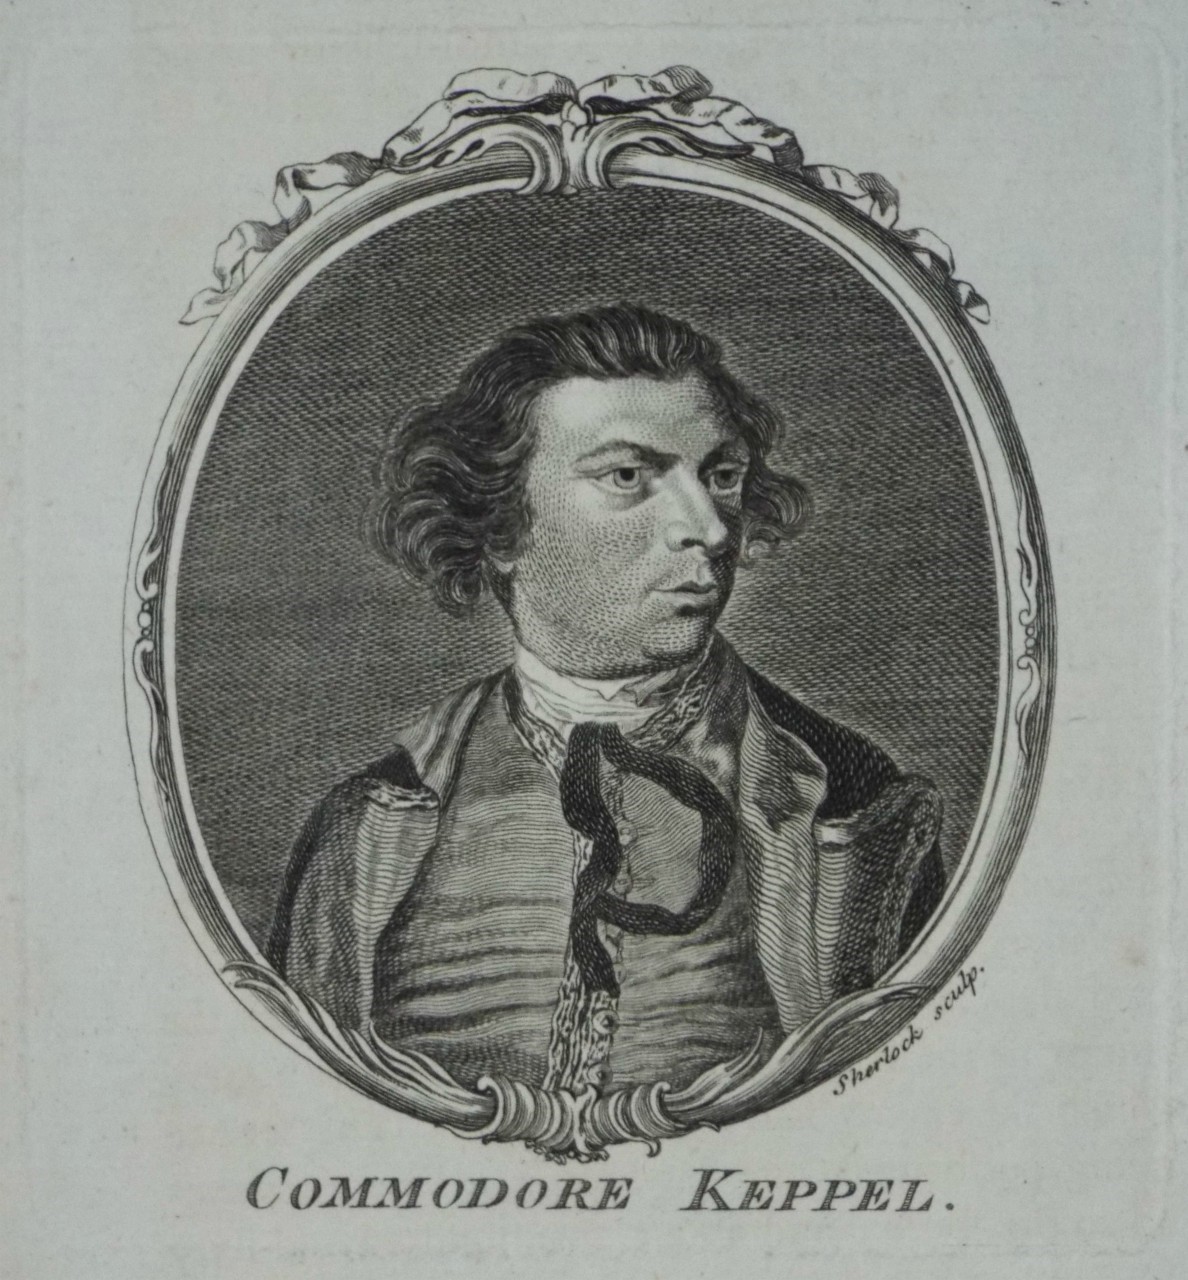 Print - Commodore Keppel. - 